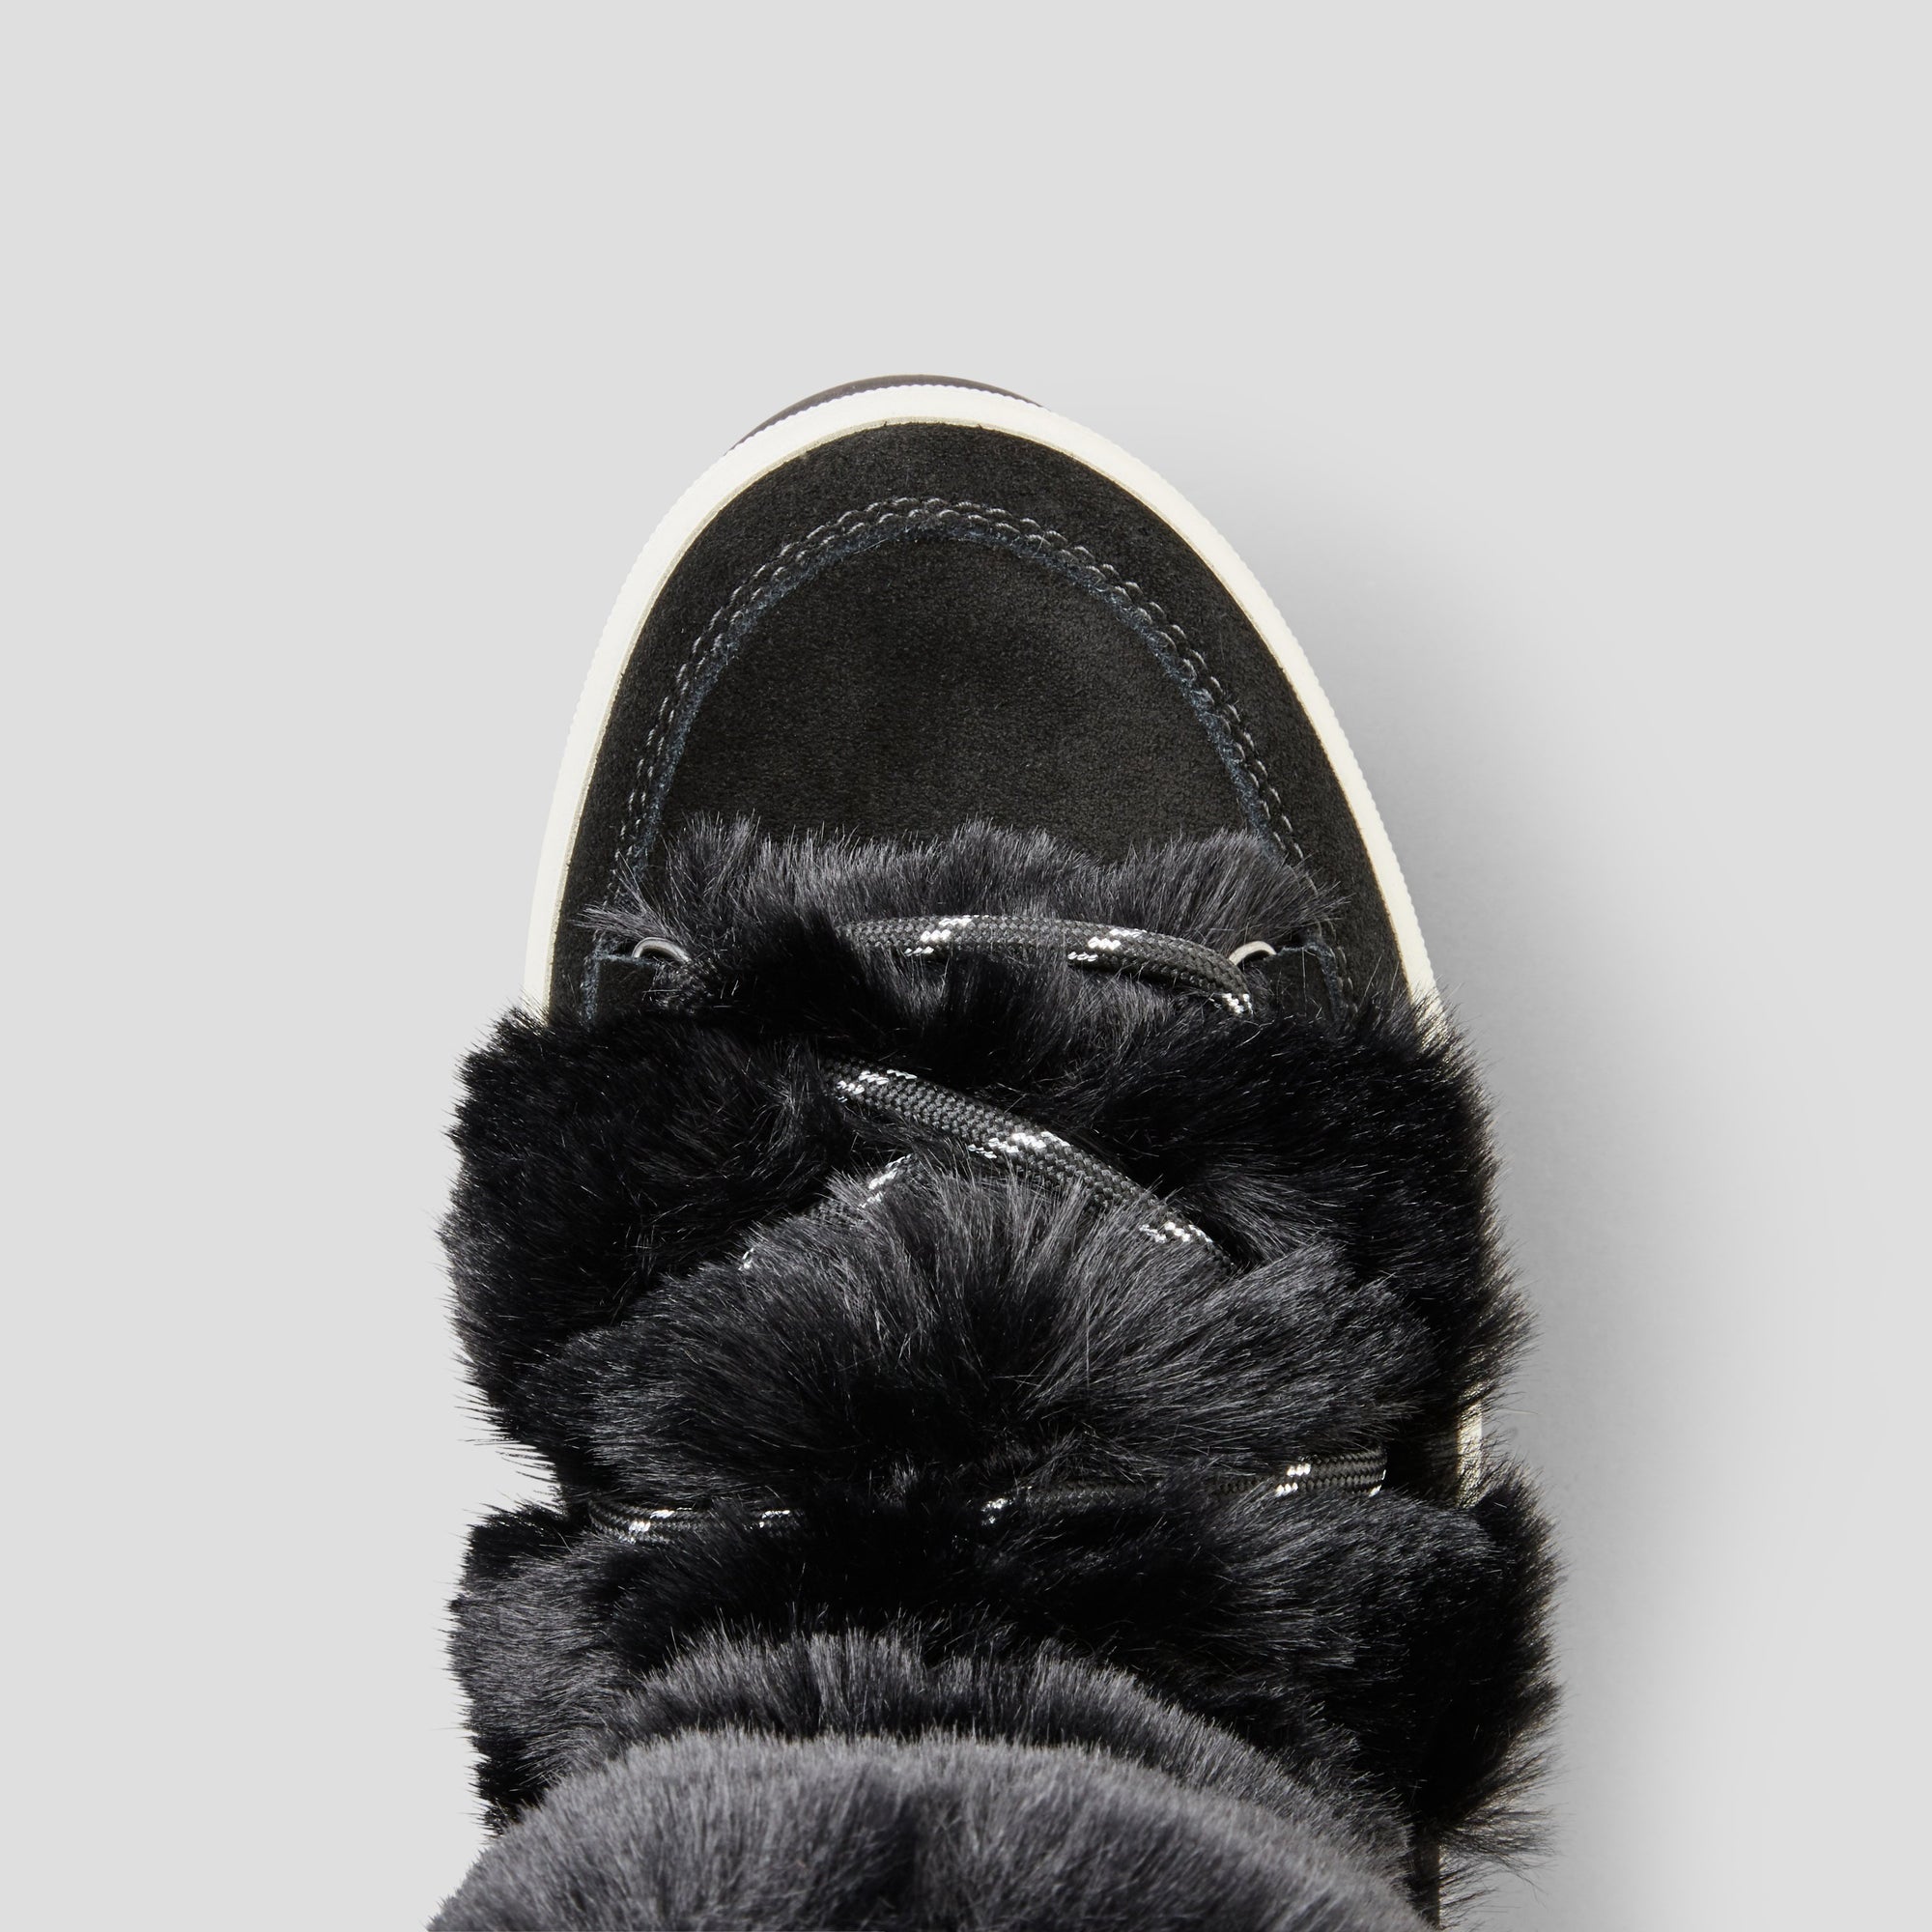 Vanity Suede Winter Boot - Color Black